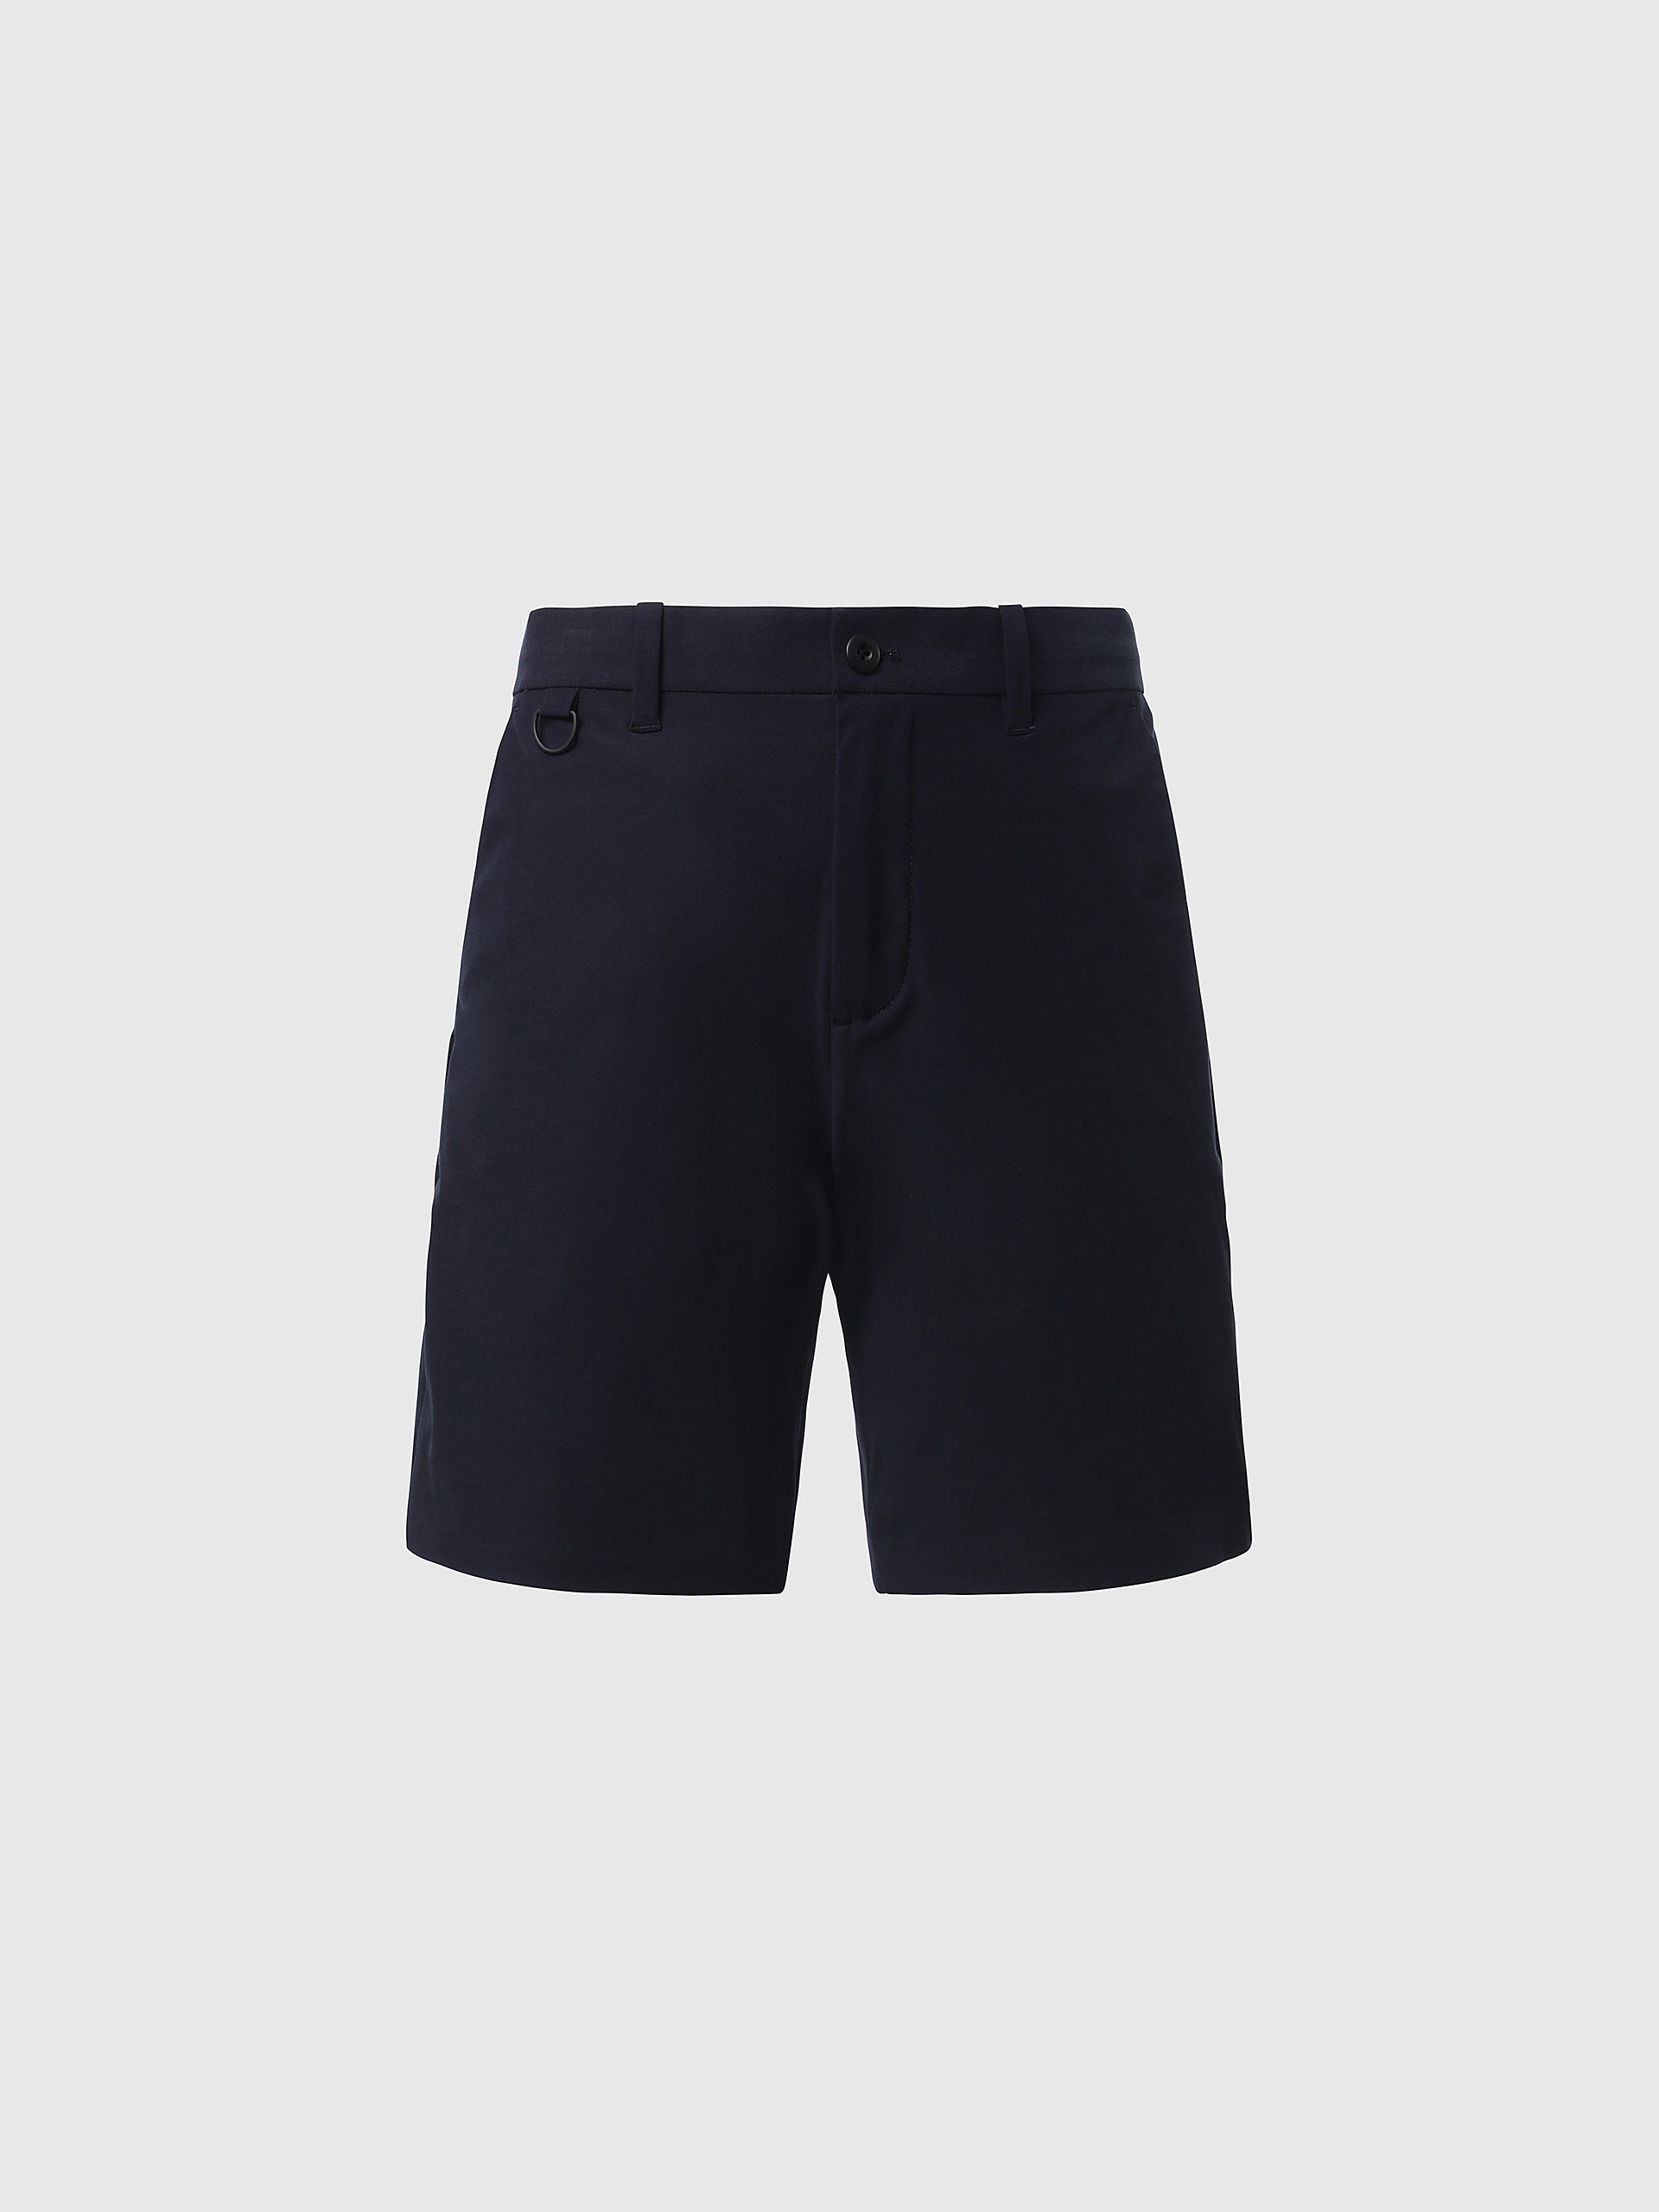 Comfort tech chino shorts